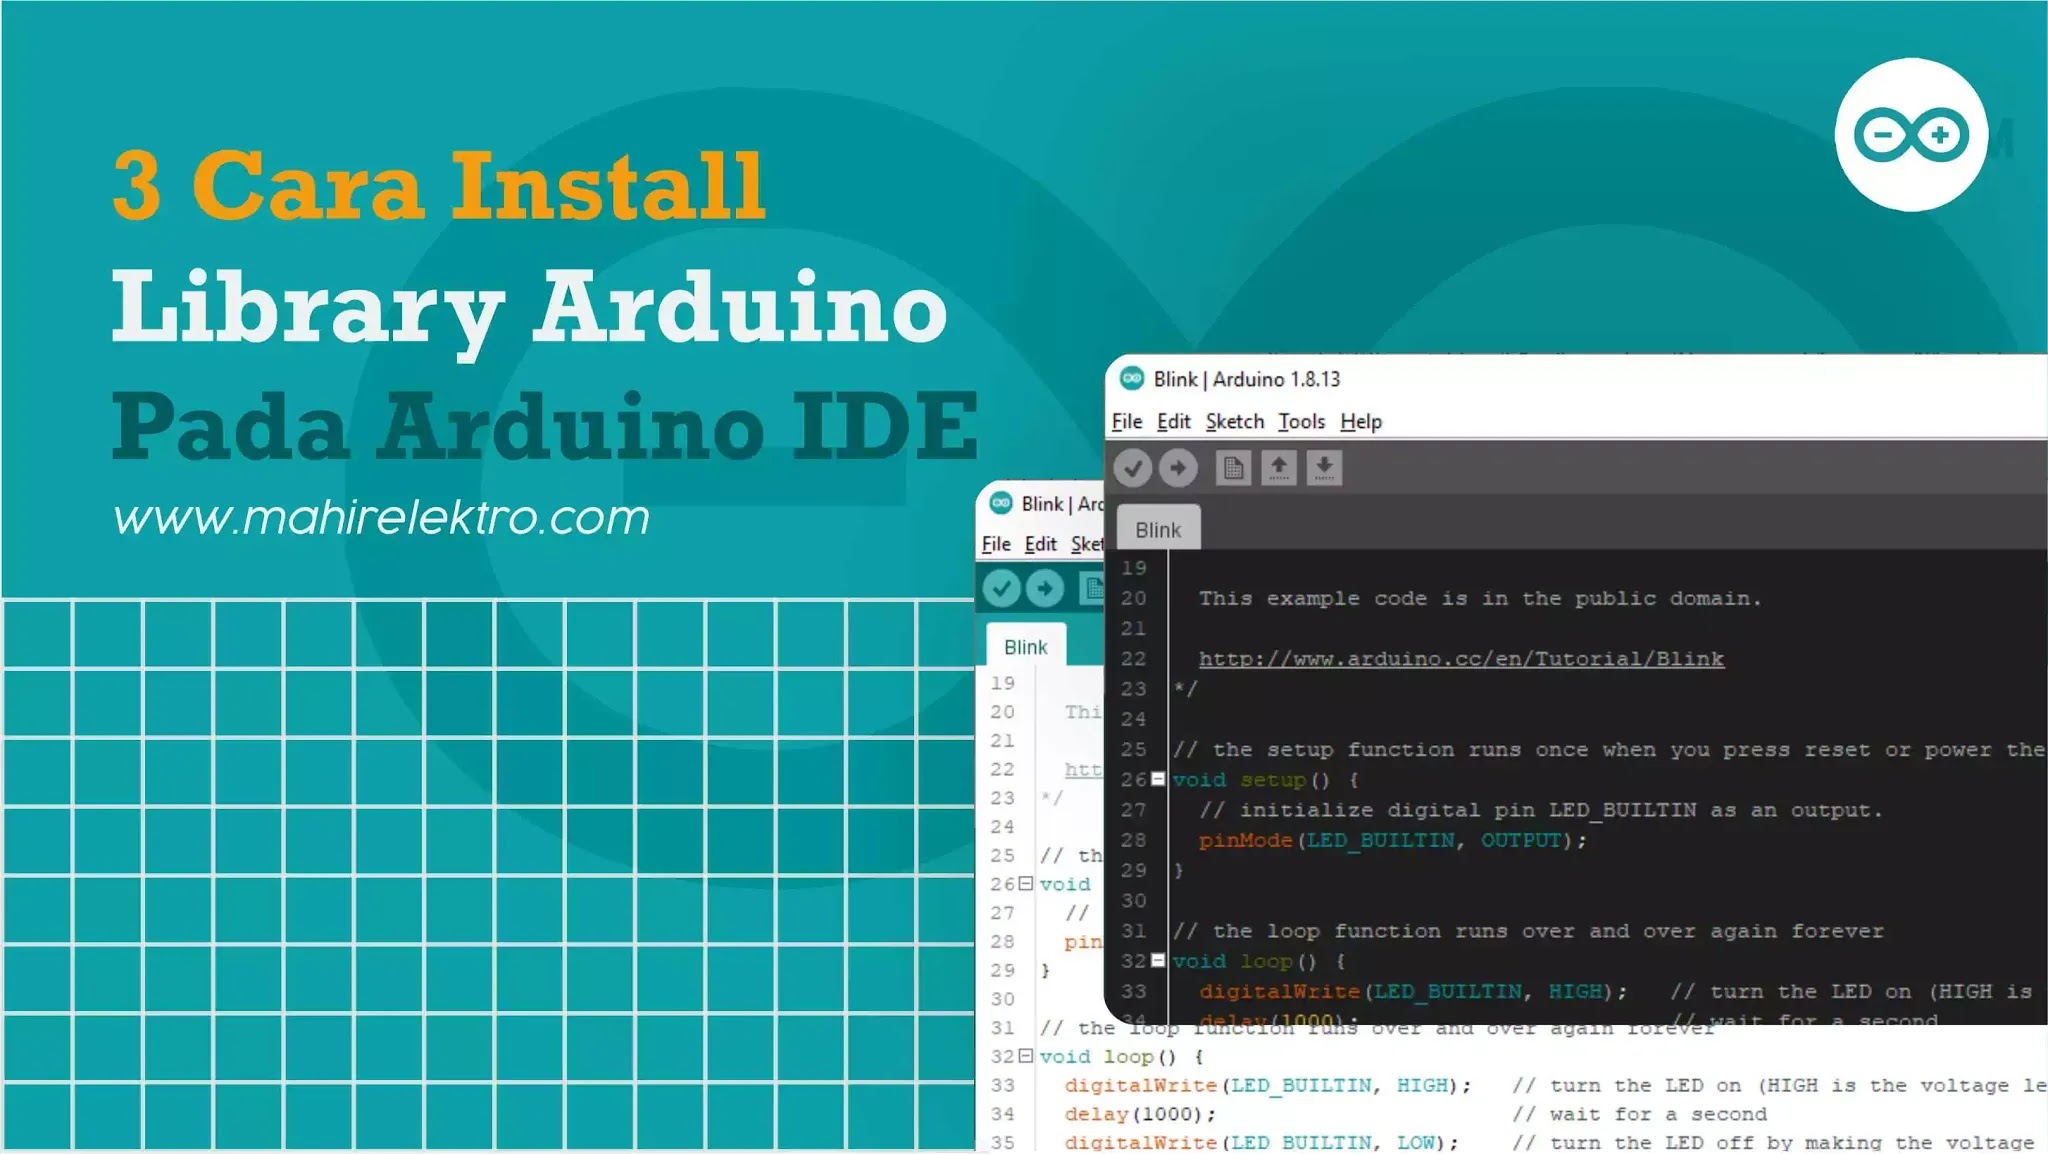 Cara Install Library Arduino pada Arduino IDE